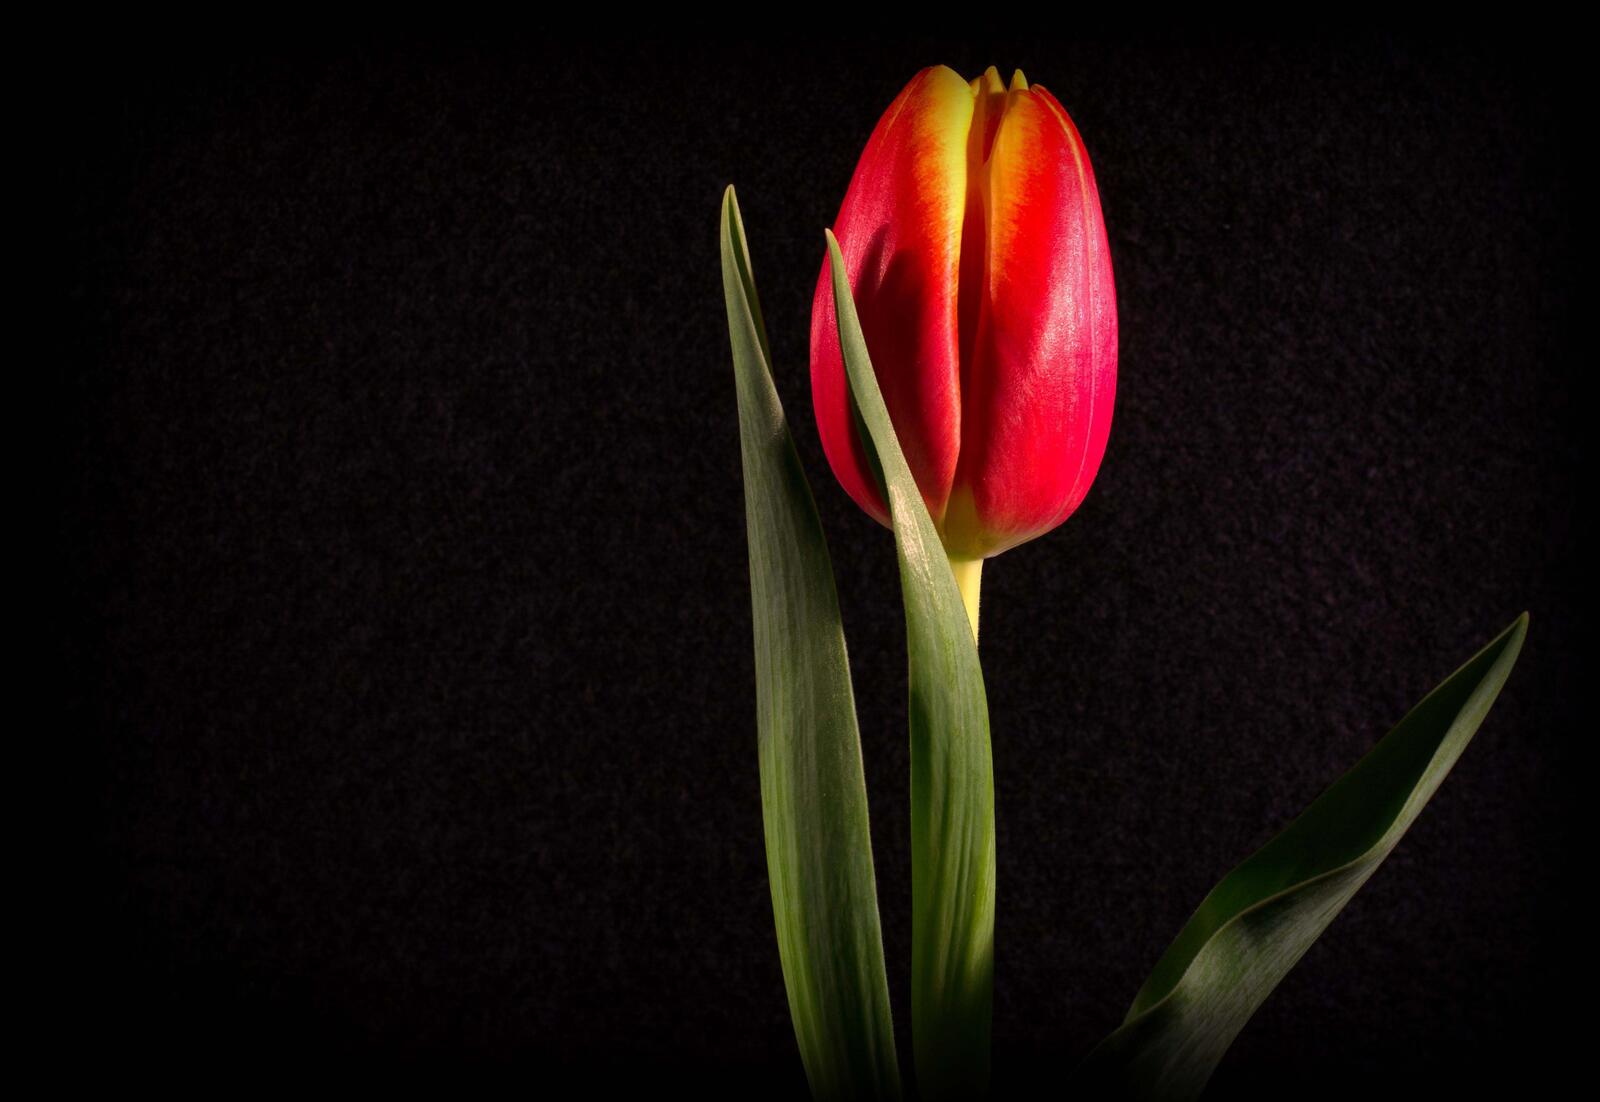 Wallpapers black background flowers tulip on the desktop